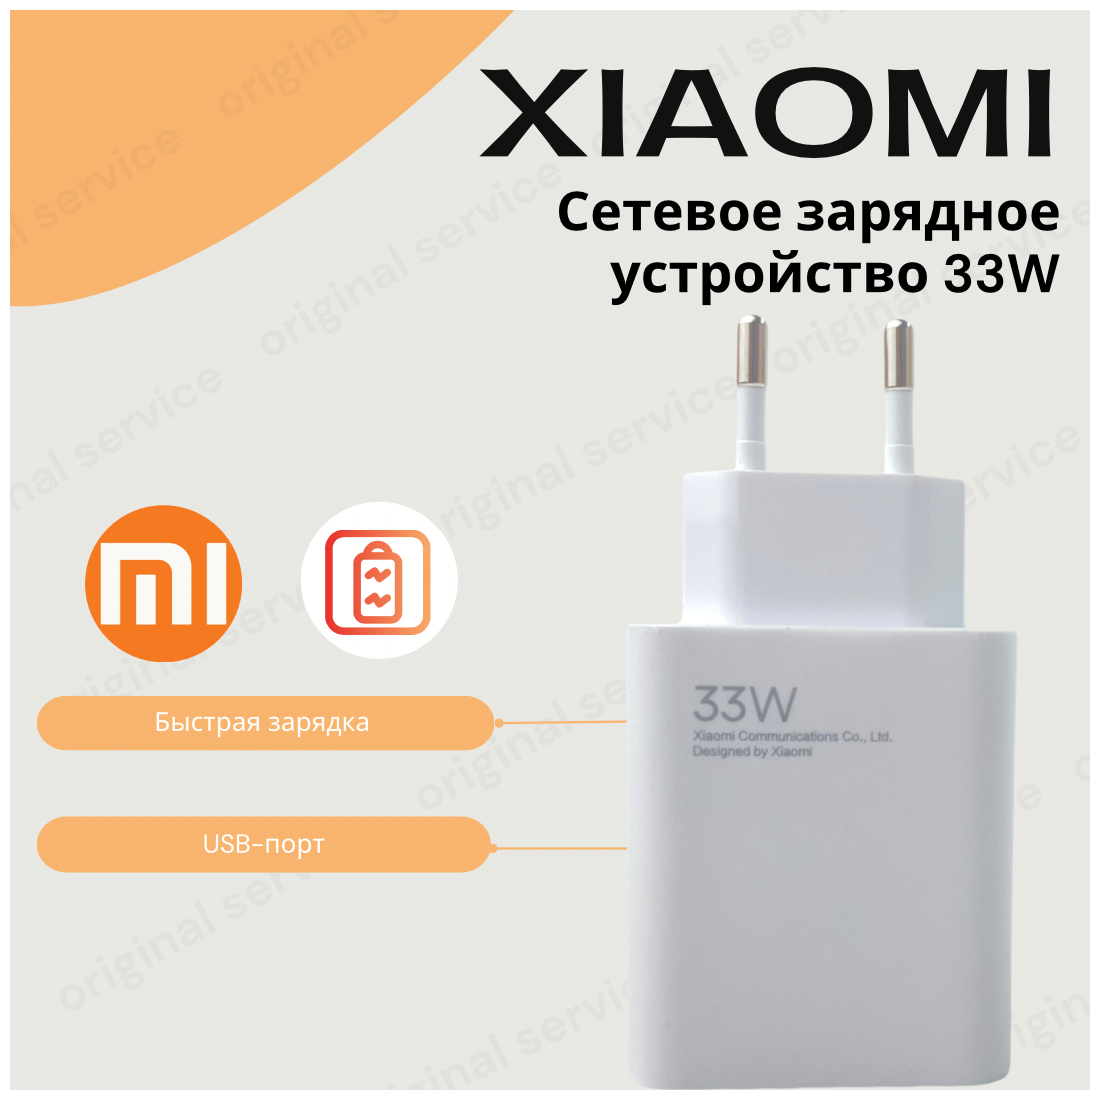 Сетевое зарядное устройство для Xiaomi с USB входом 33W (MDY-11-EZ)без кабеля